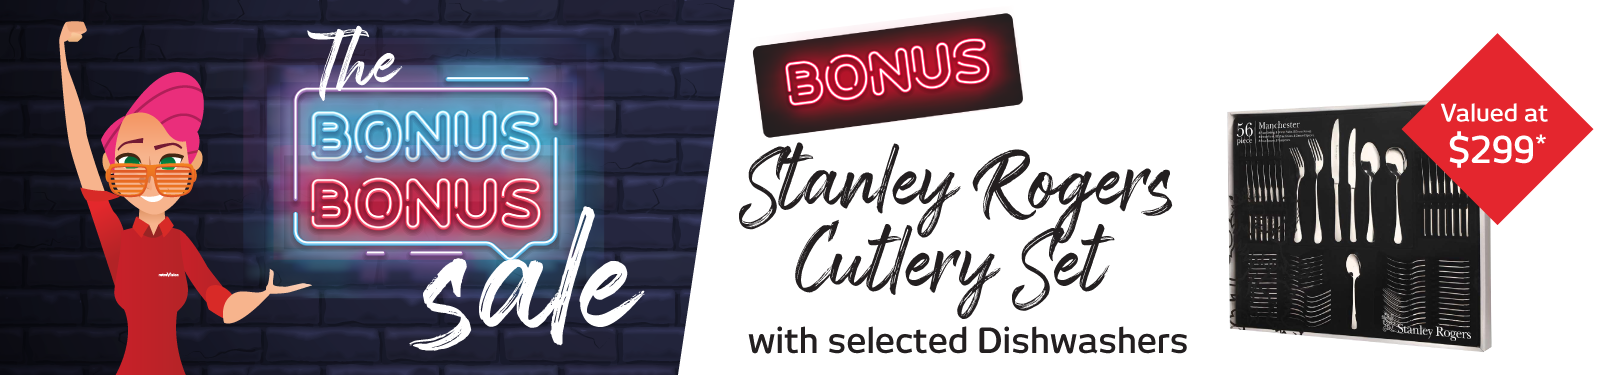 Bonus Stanley Rogers Cutlery Set at Retravision